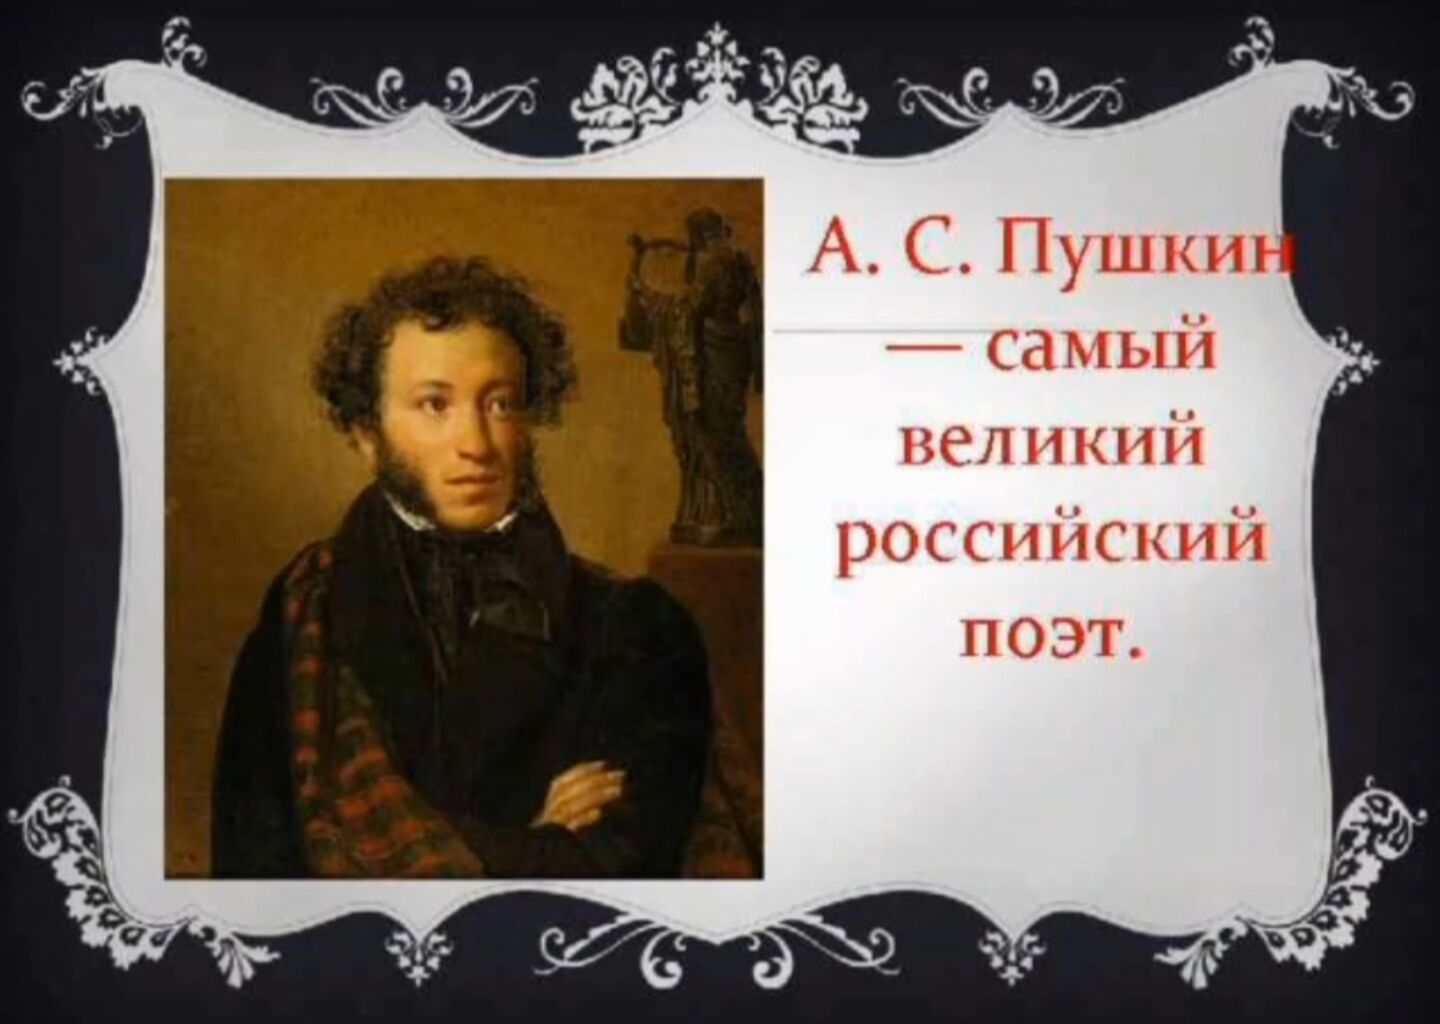 пушкин биография фото